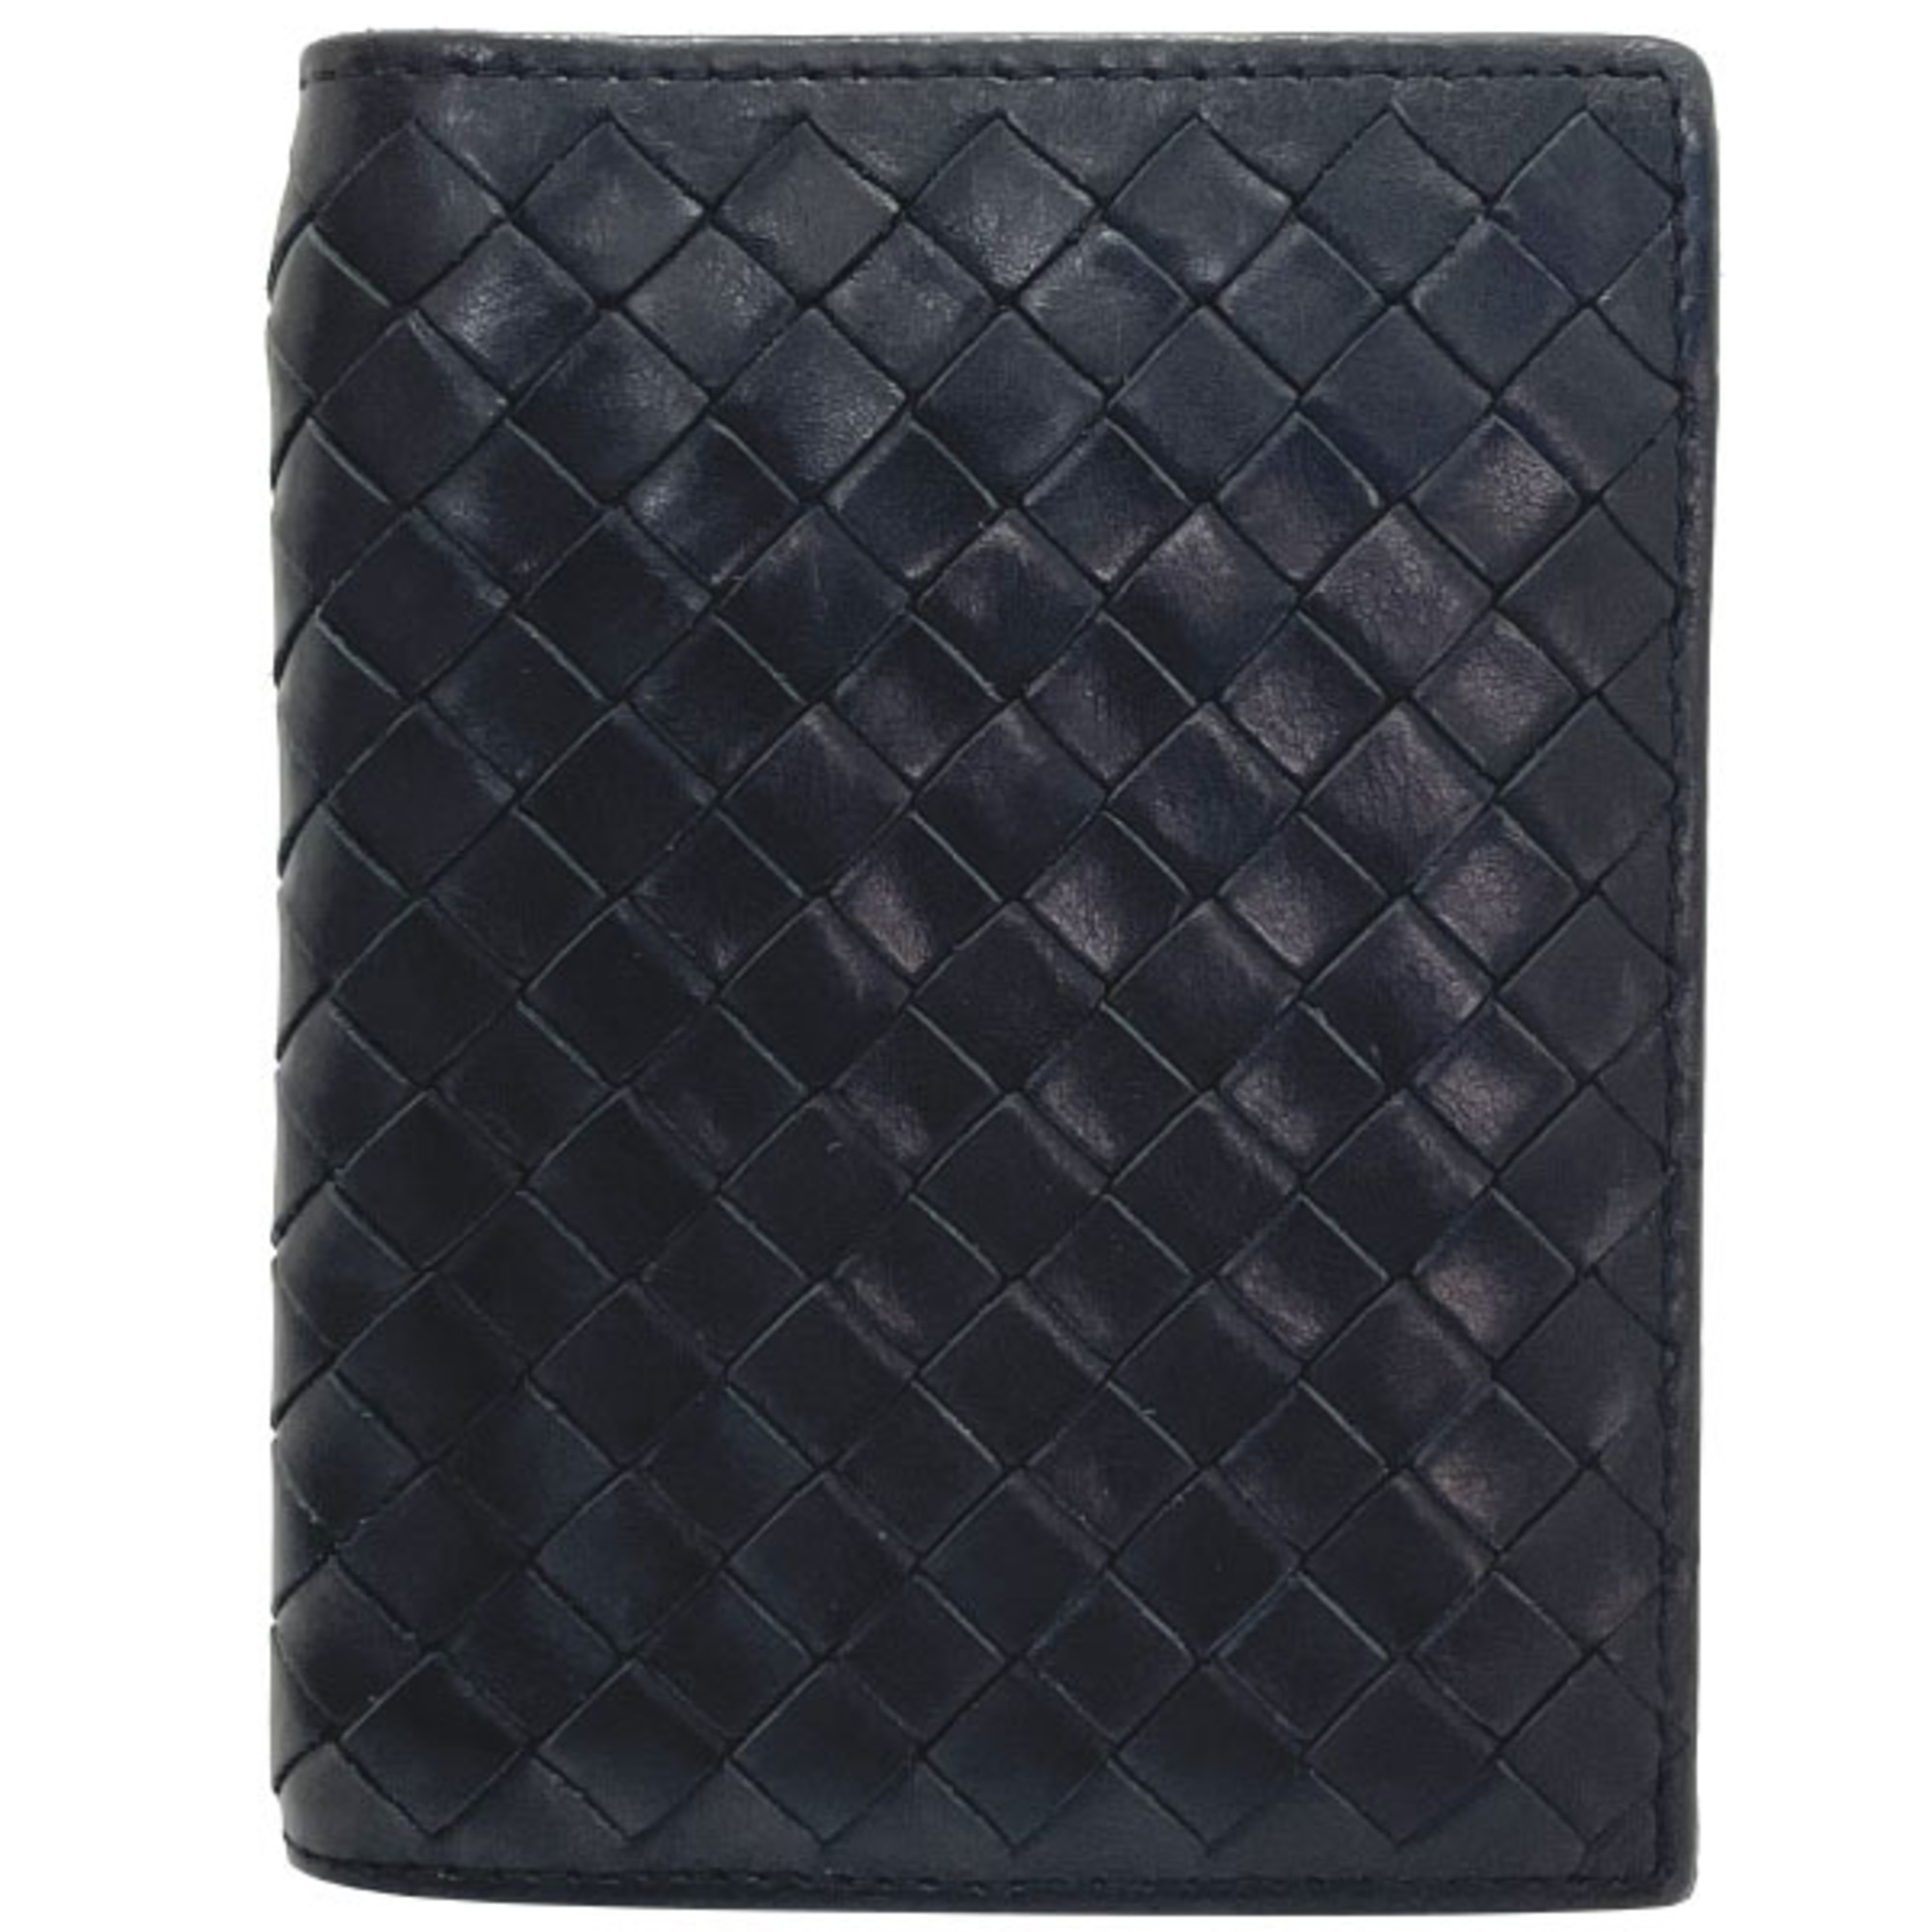 Bottega Veneta Wallet Intrecciato Bi-fold Leather Black 130683 BOTTEGA VENETA Chain Billfold Compact AA-12184